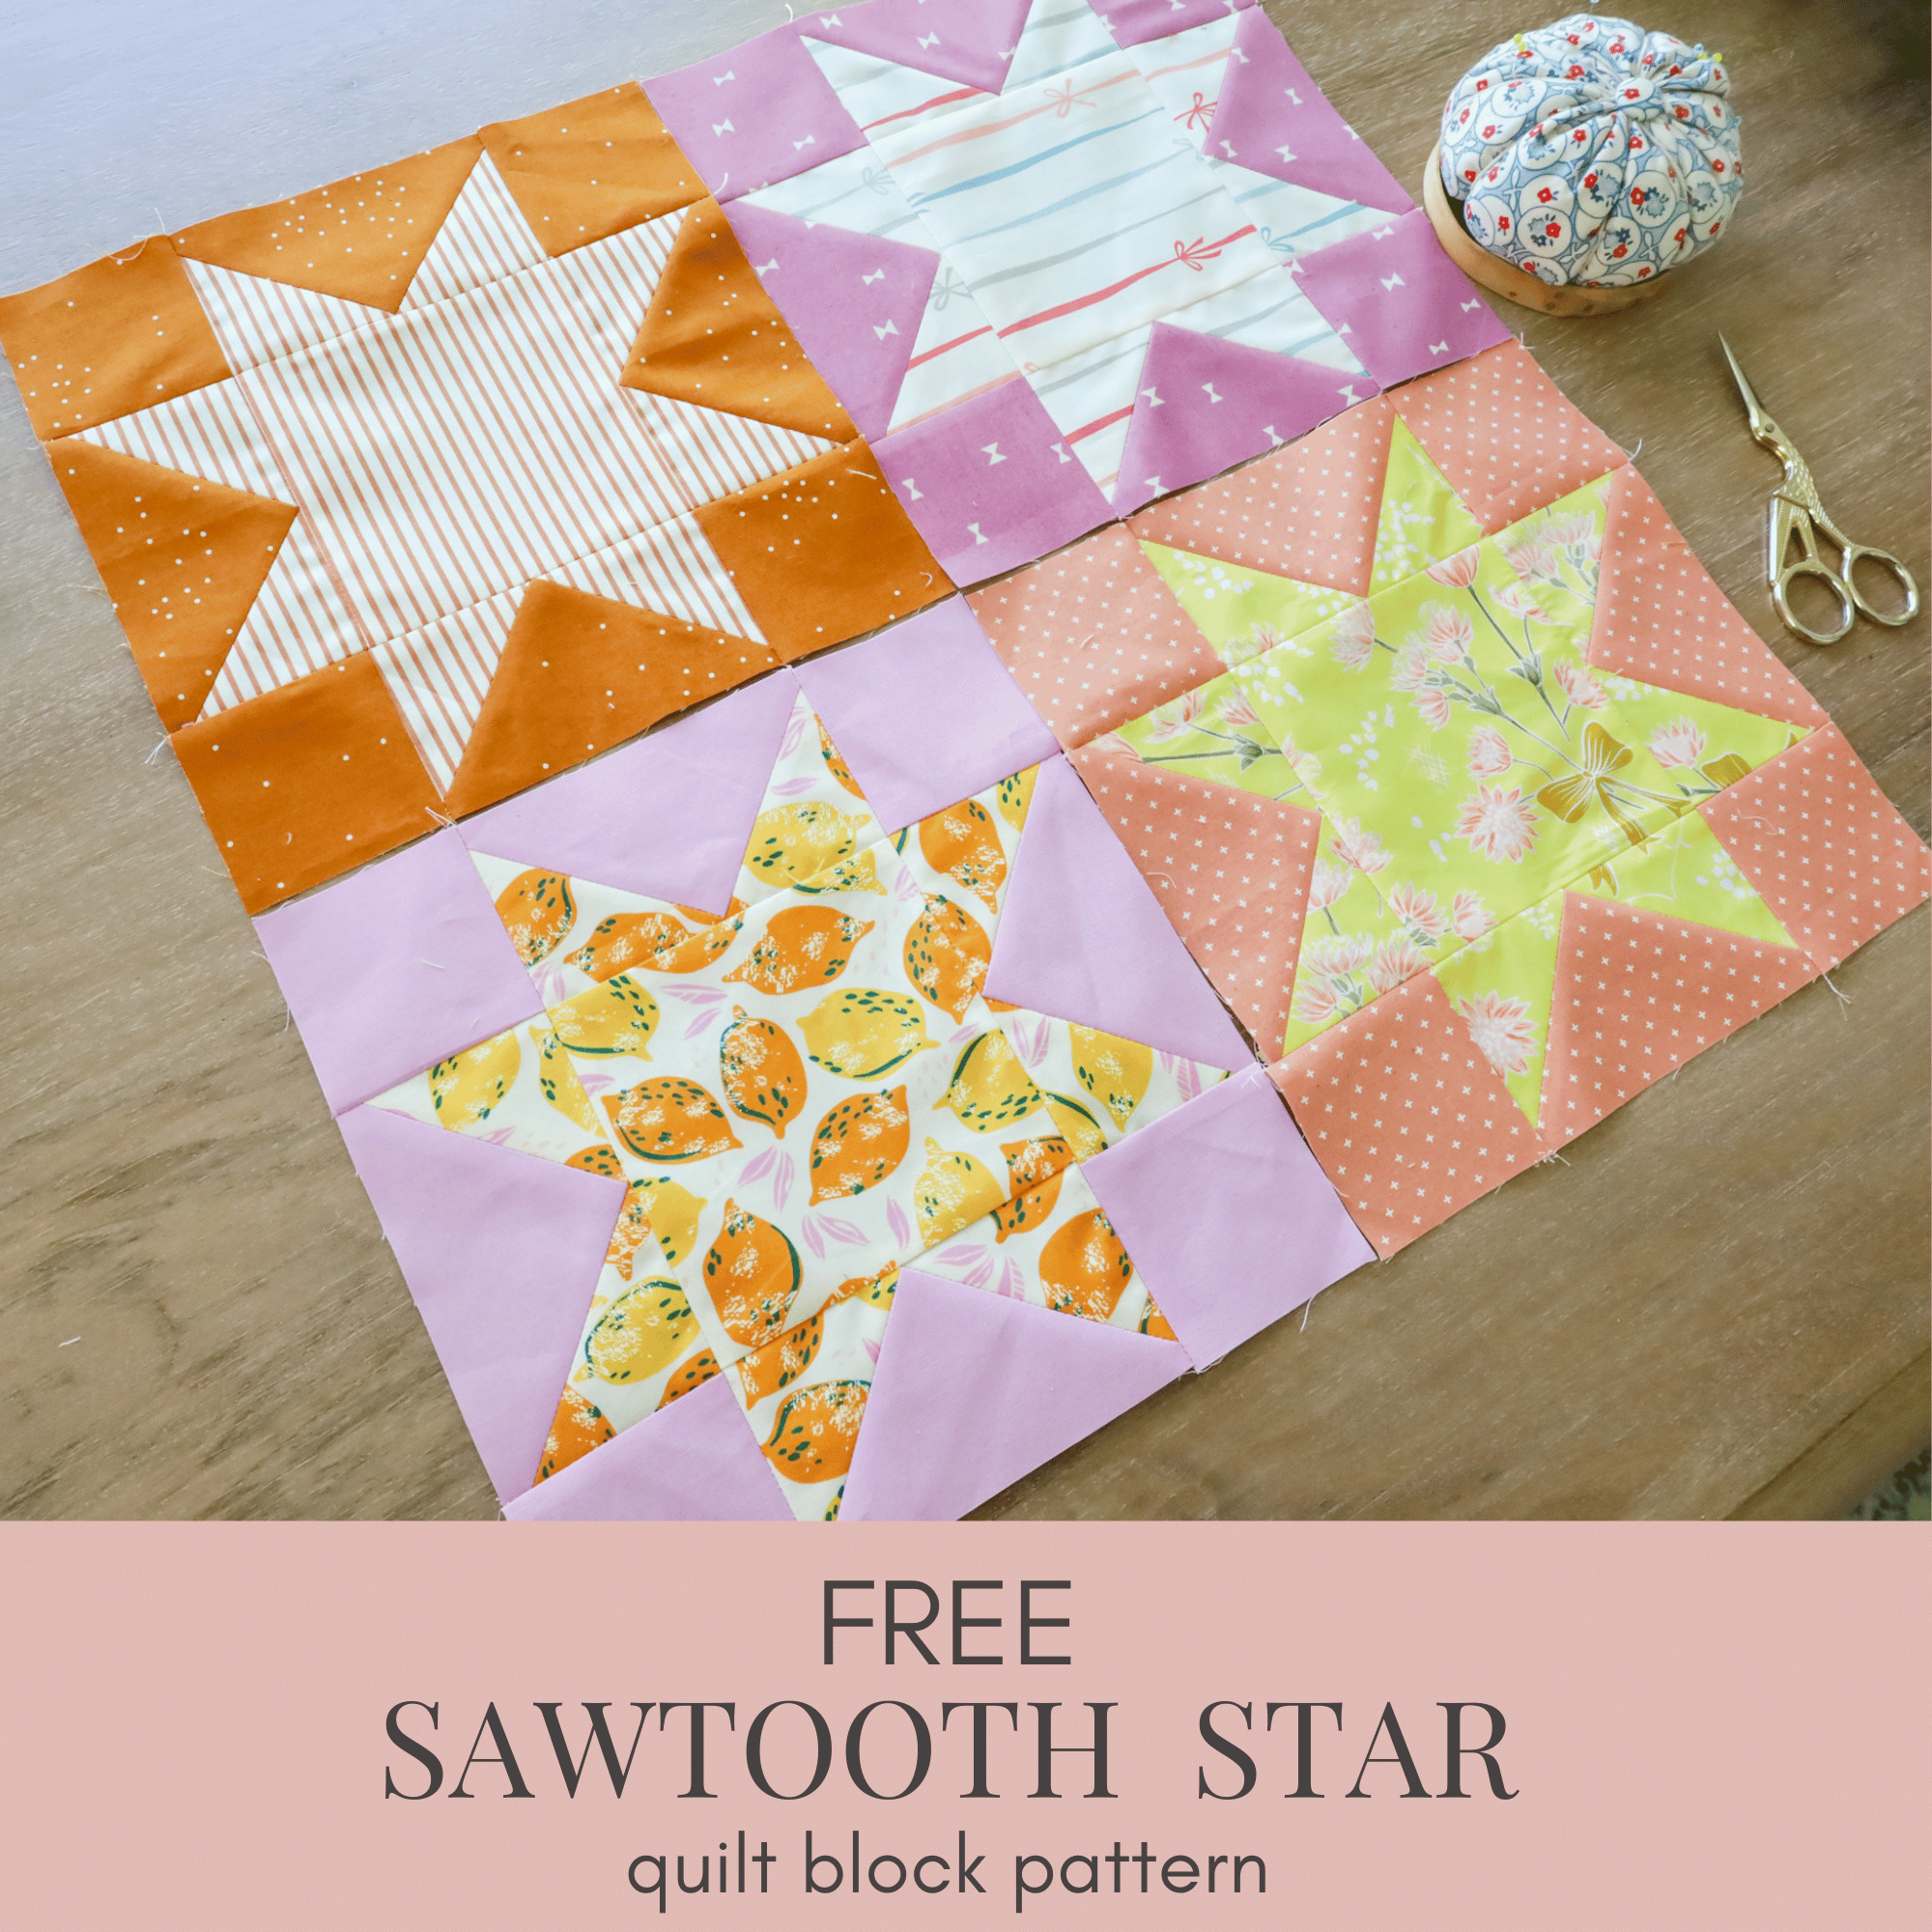 Free Sawtooth Star Quilt Block Pattern